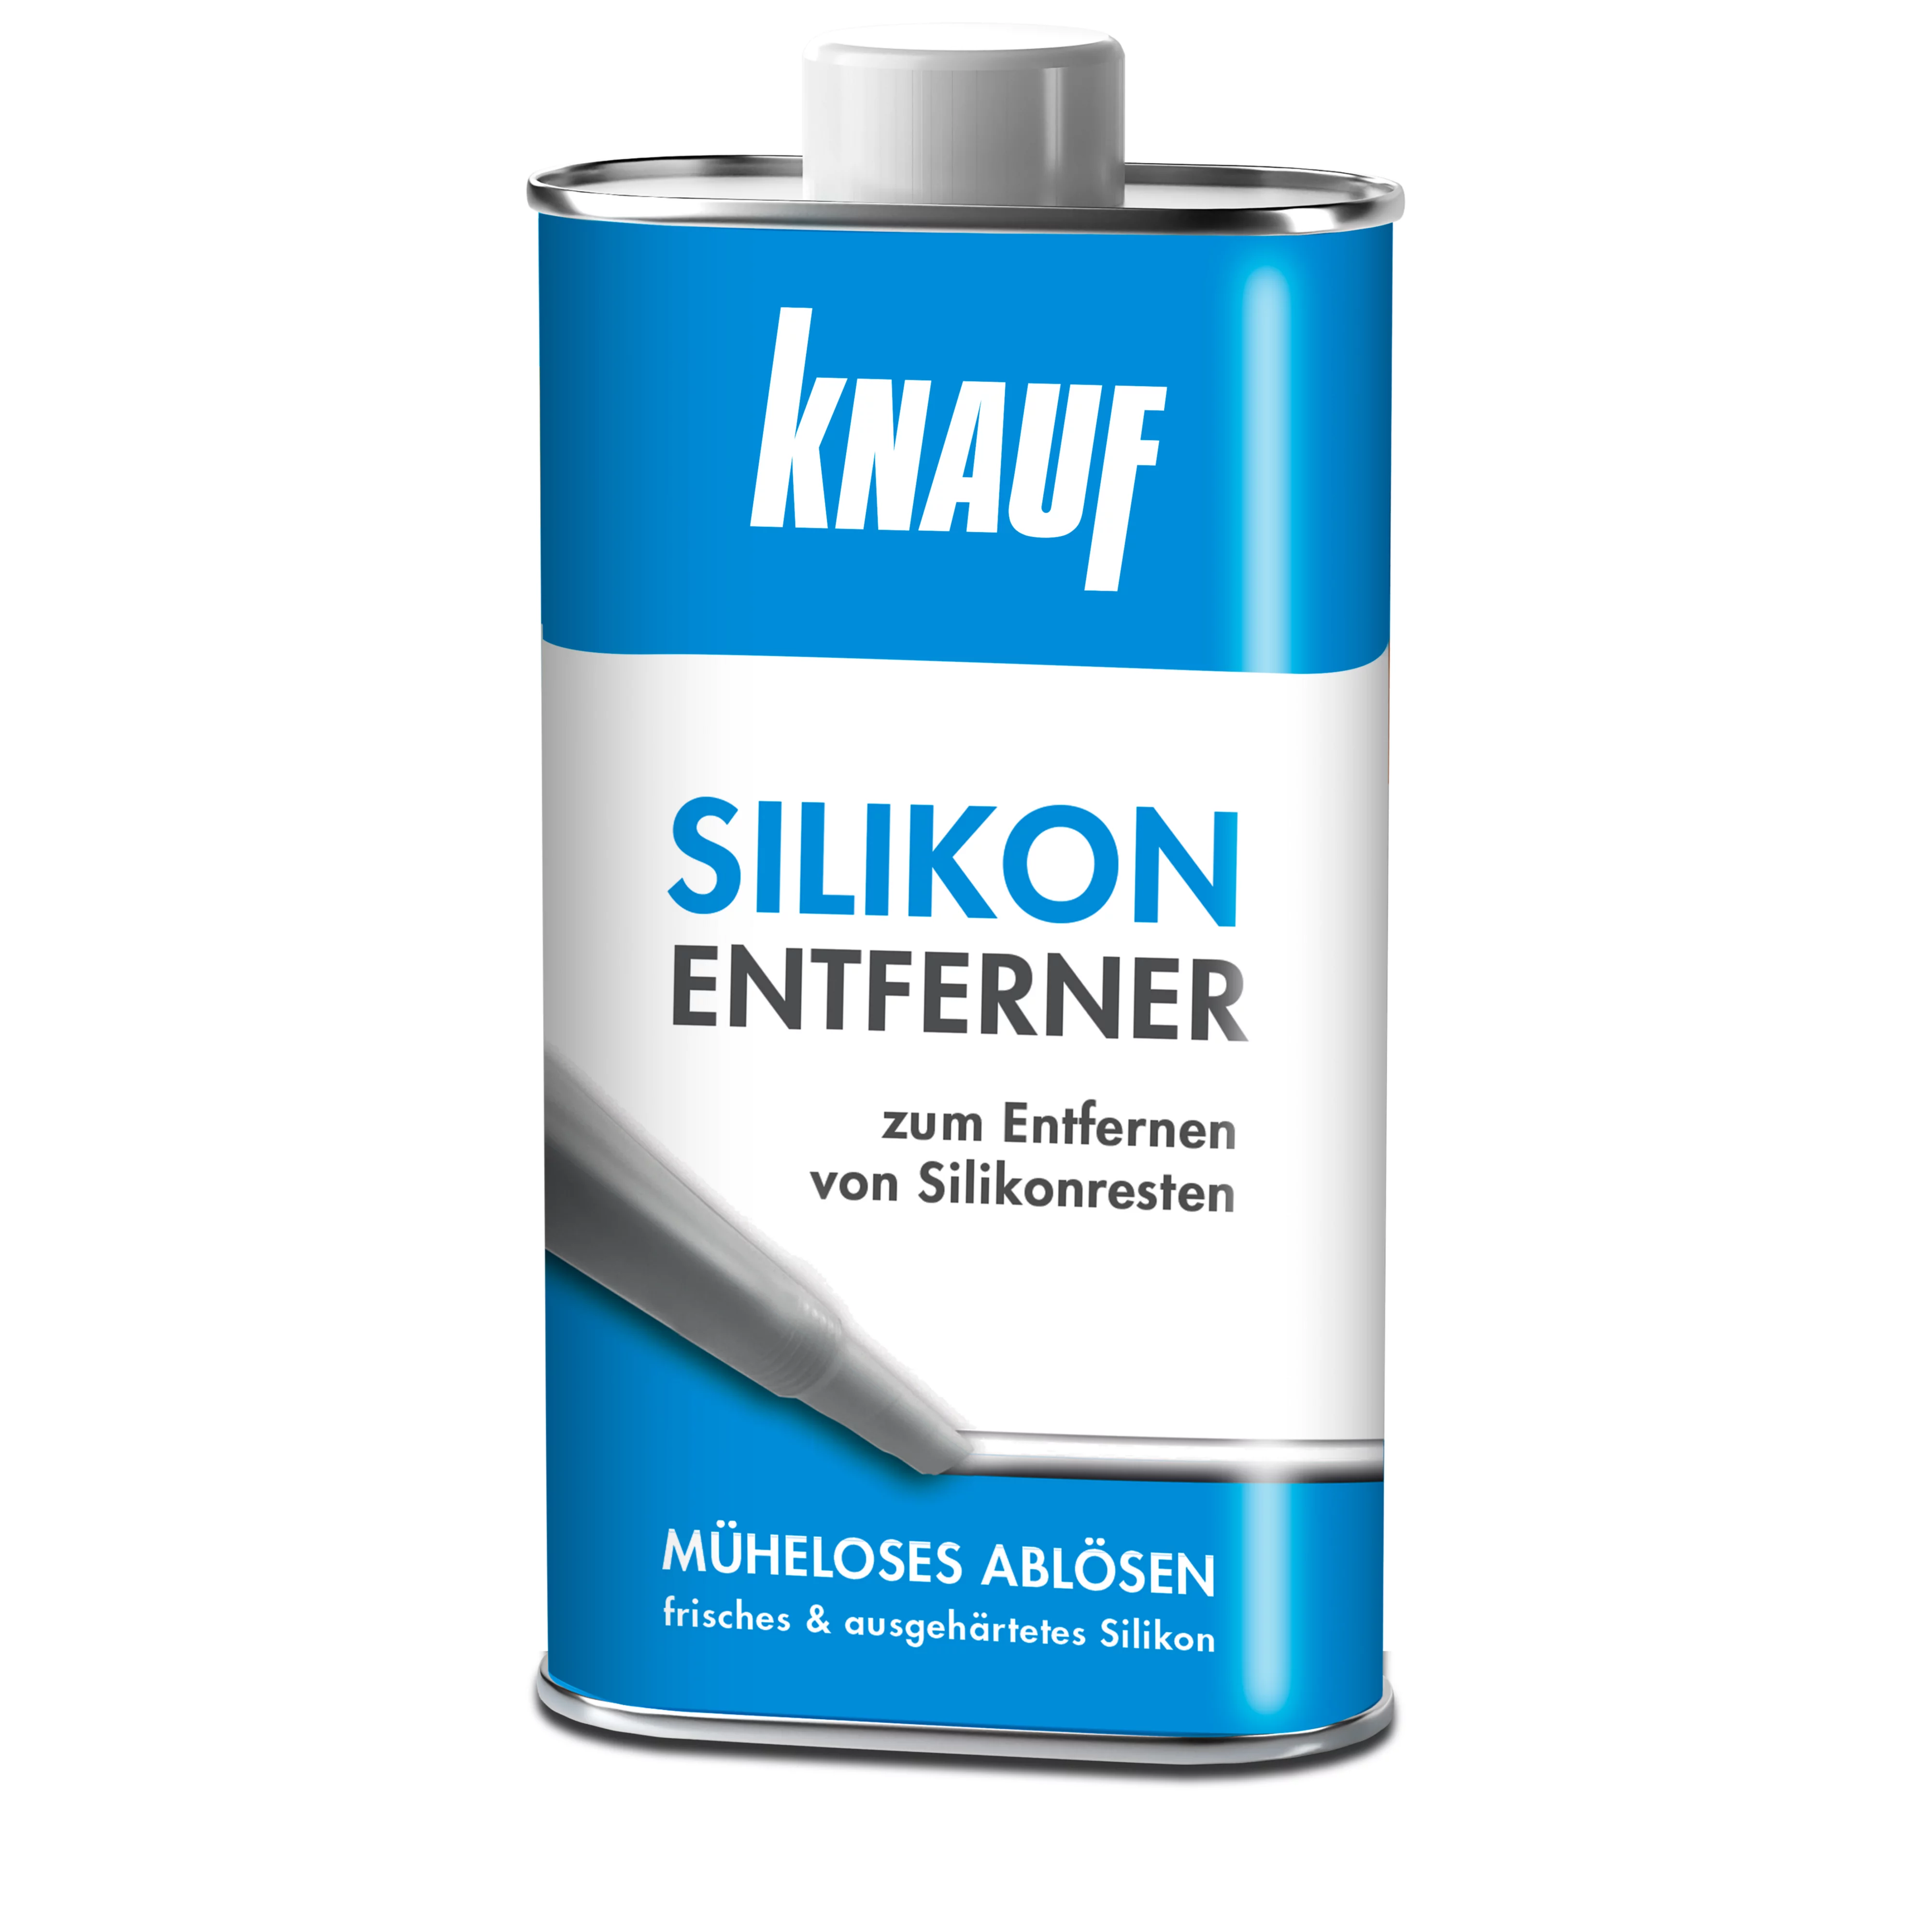 ID_1629356_Knauf_Silikon_Entferner_front